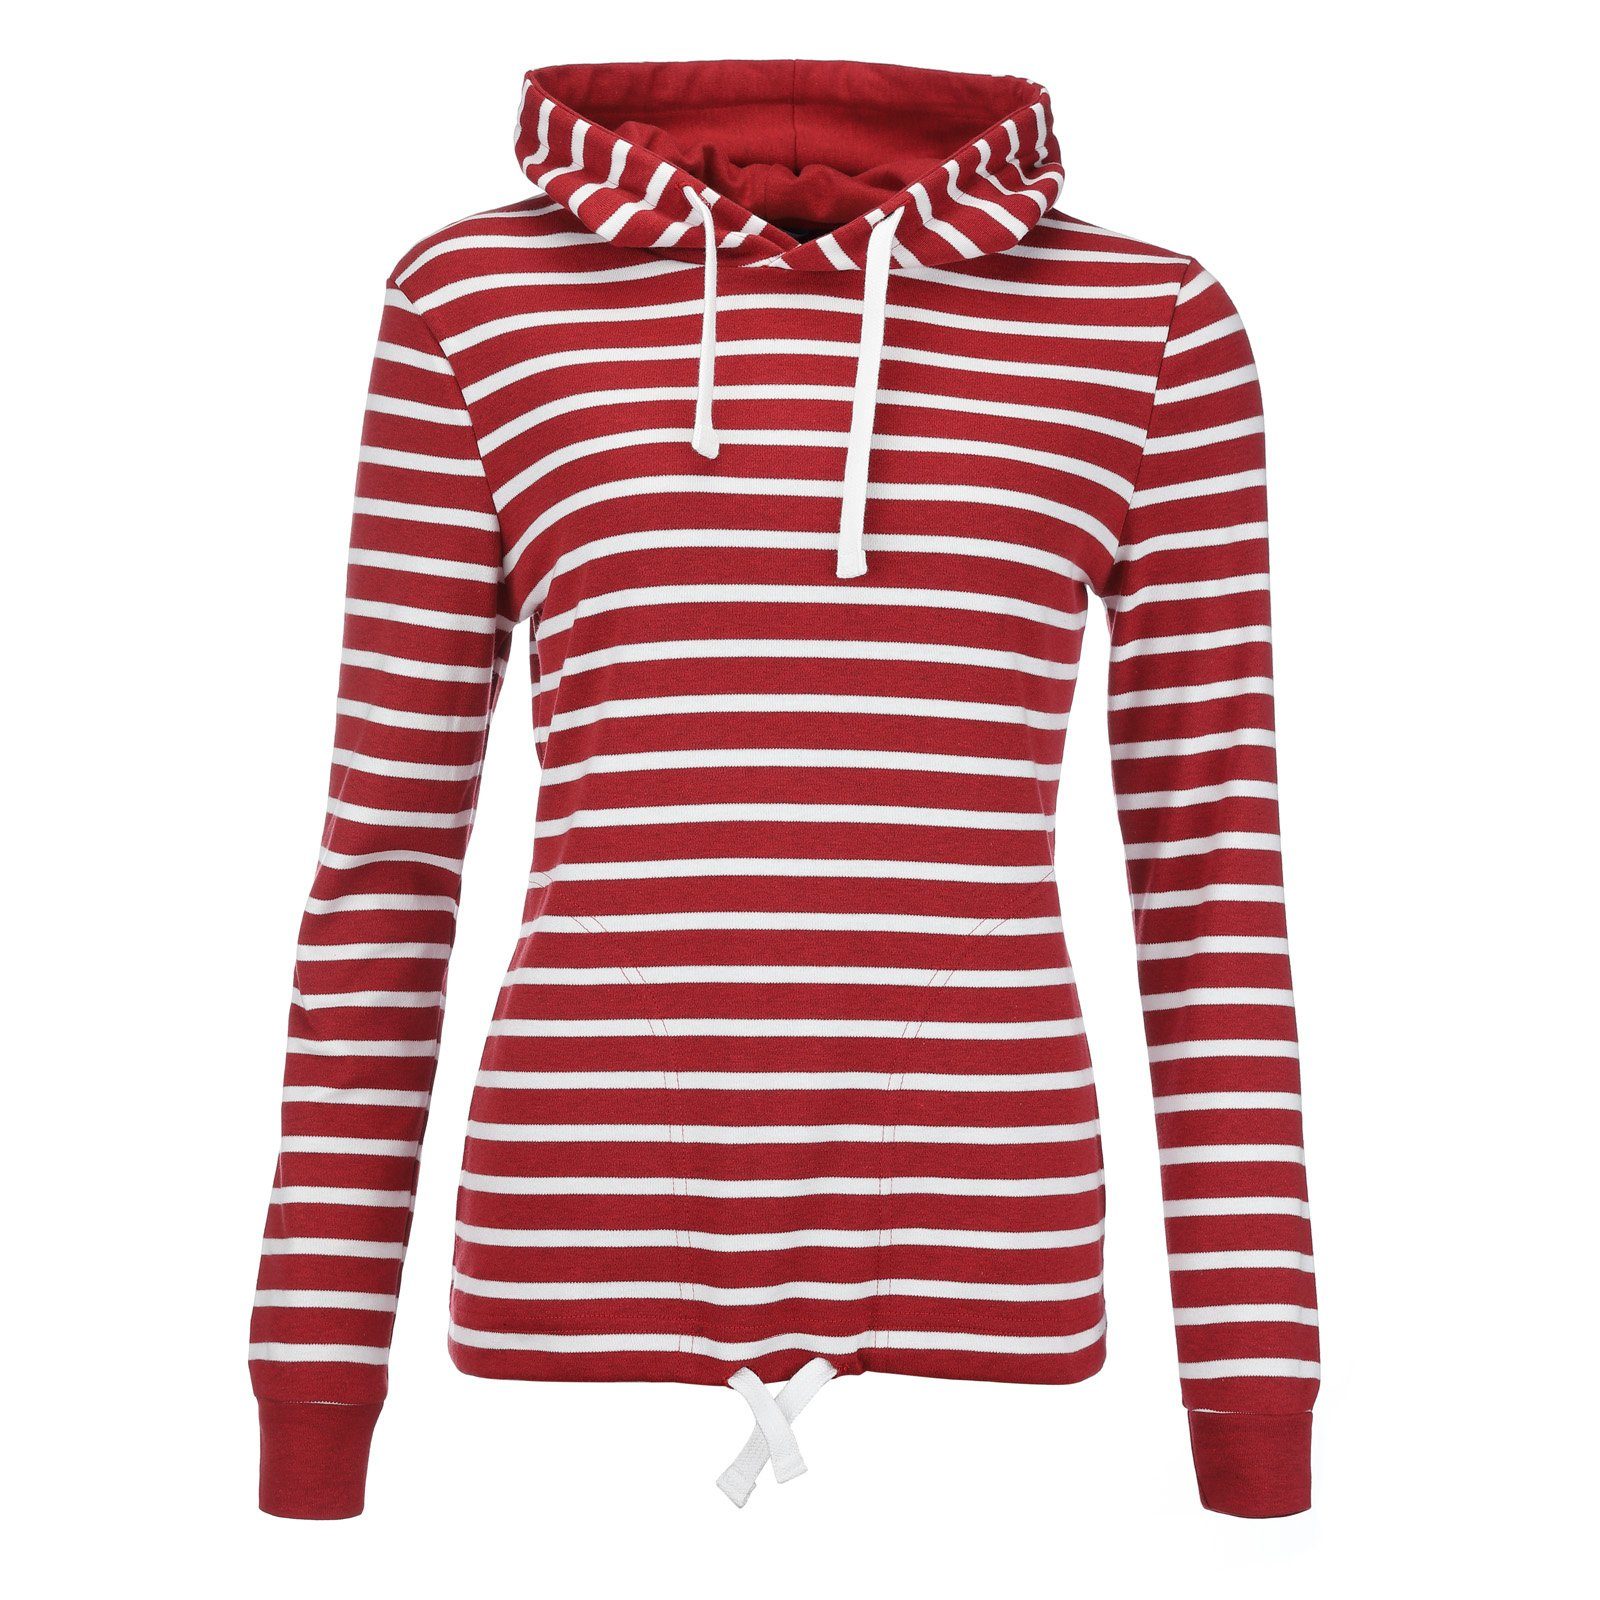 modAS Kapuzenpullover Damen Kapuzenshirt Maritim gestreift - Langarmshirt Streifen Baumwolle (02) rot / weiß